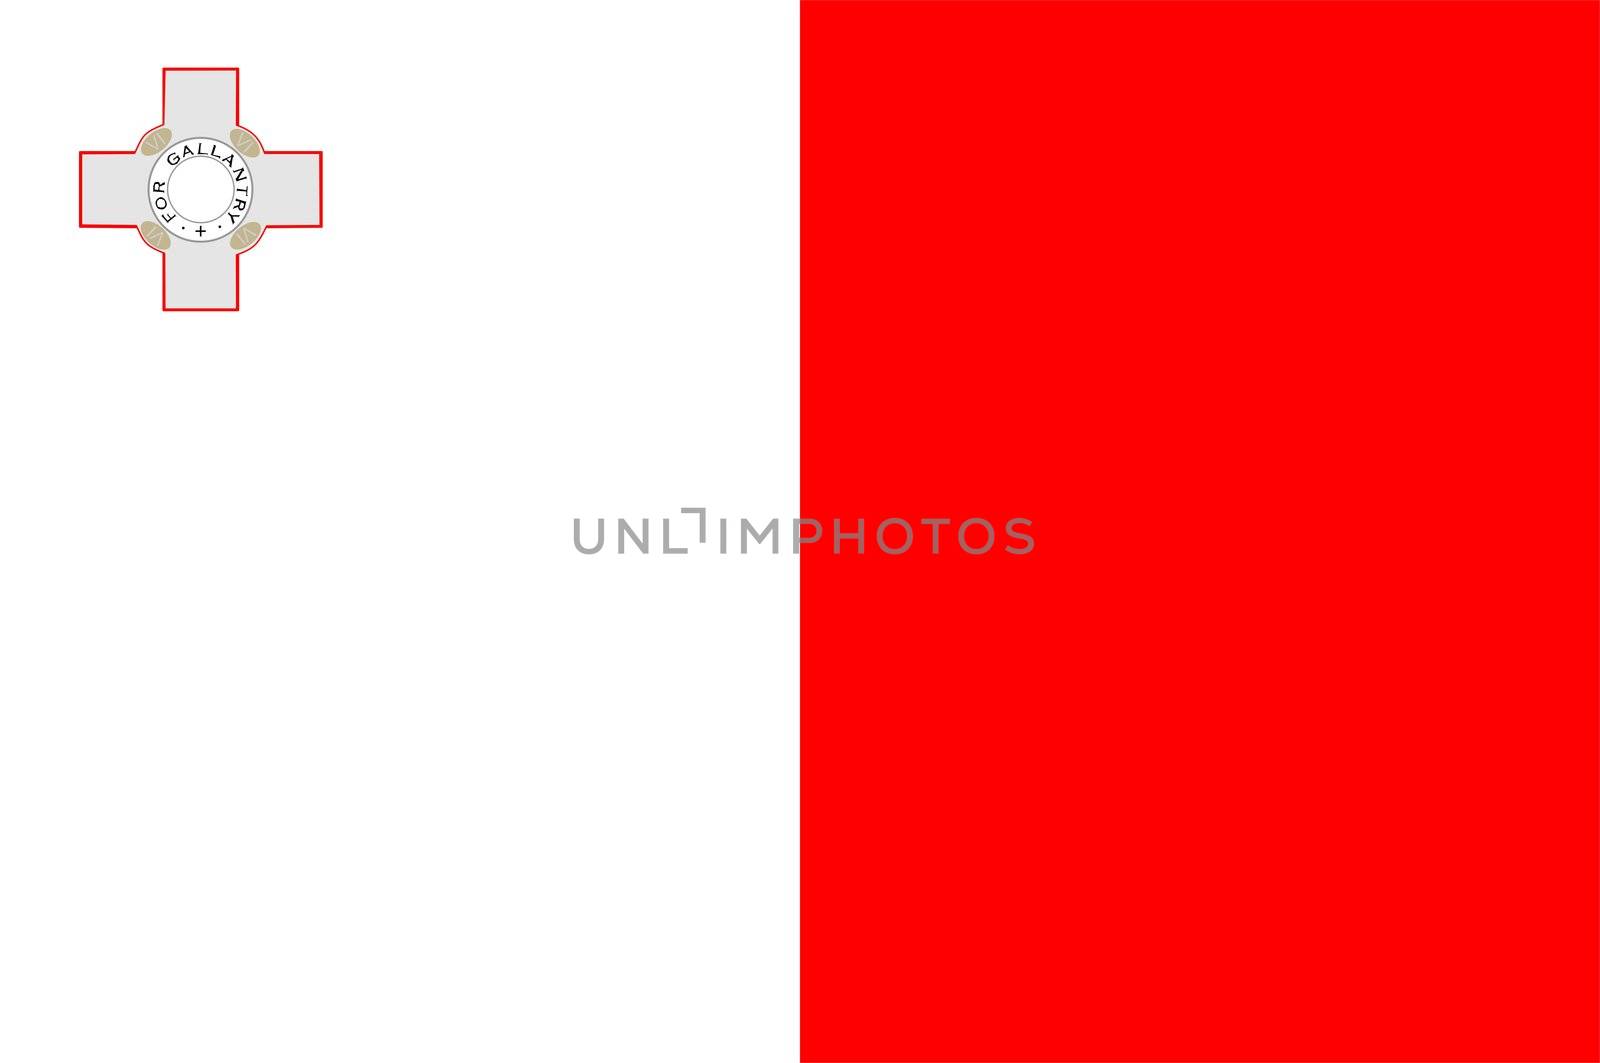 2D illustration of the flag of Malta